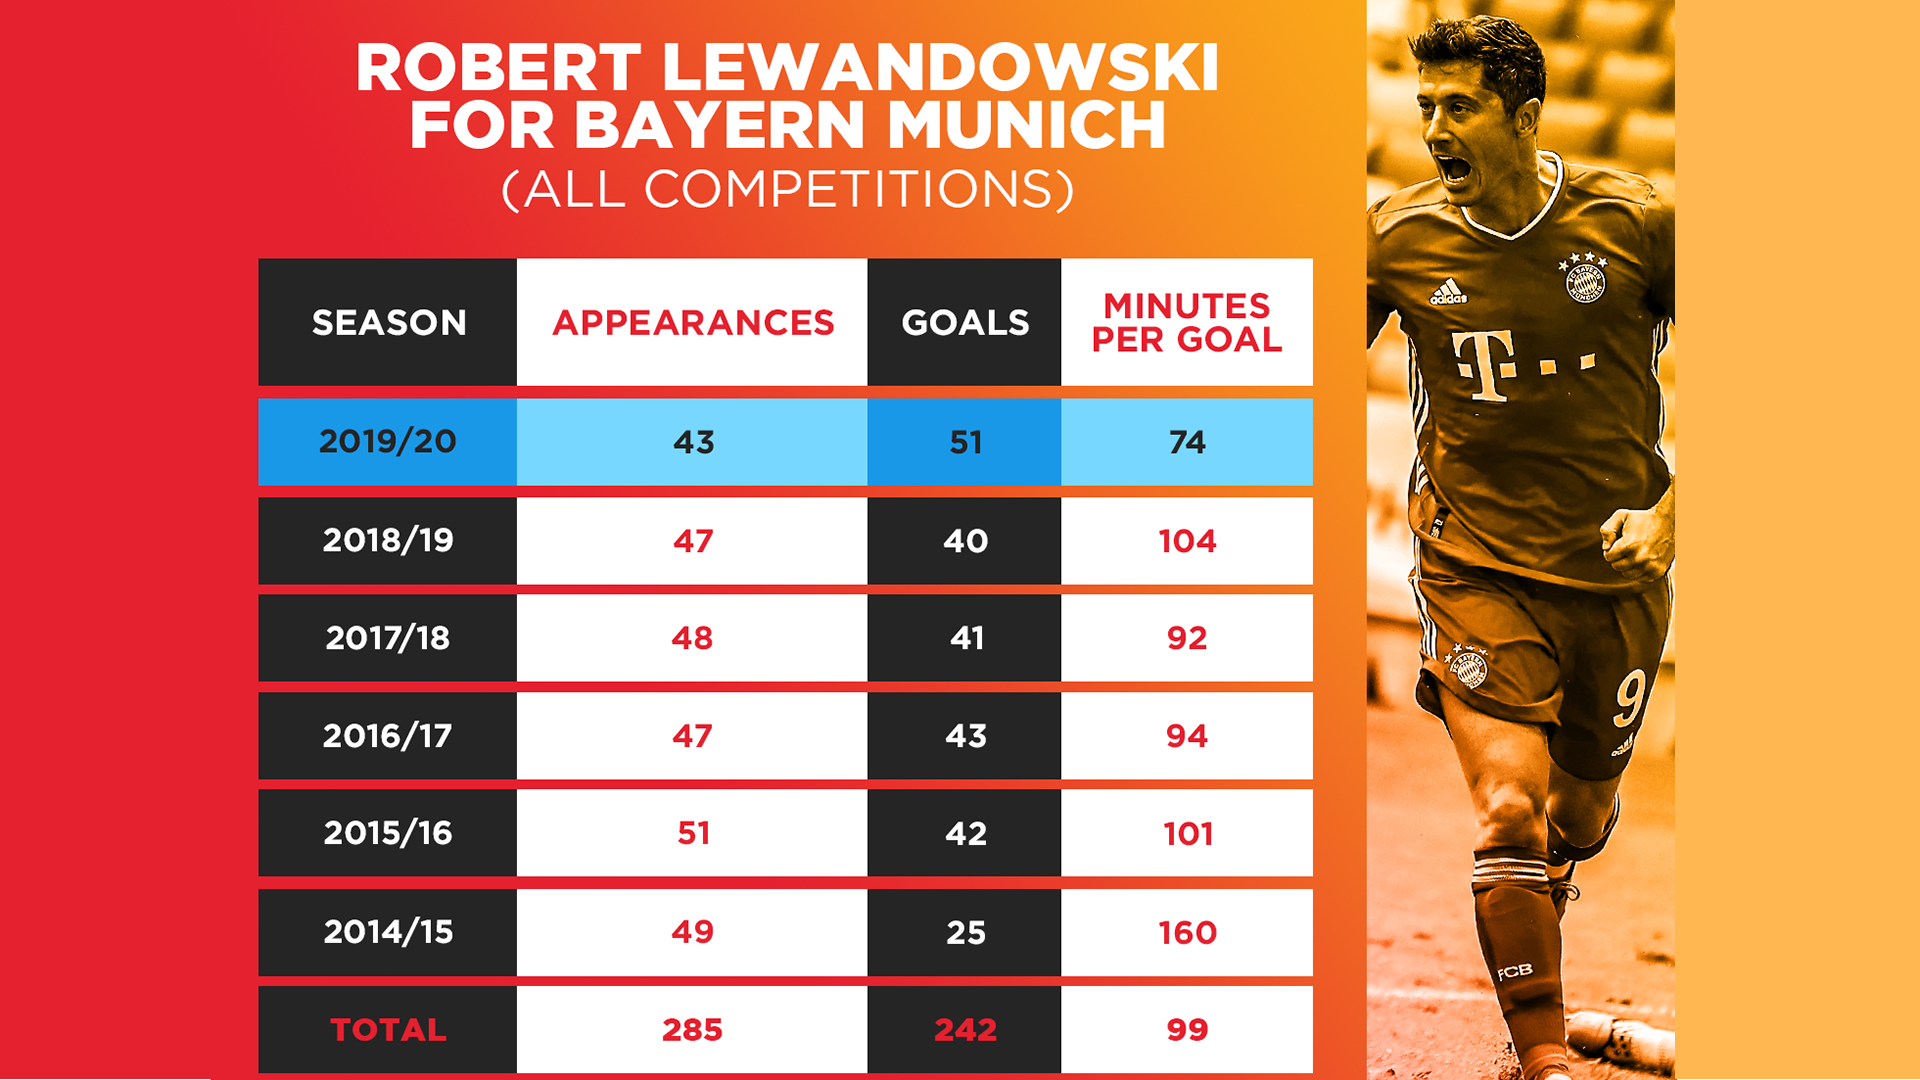 Robert Lewandowski season-on-season performance